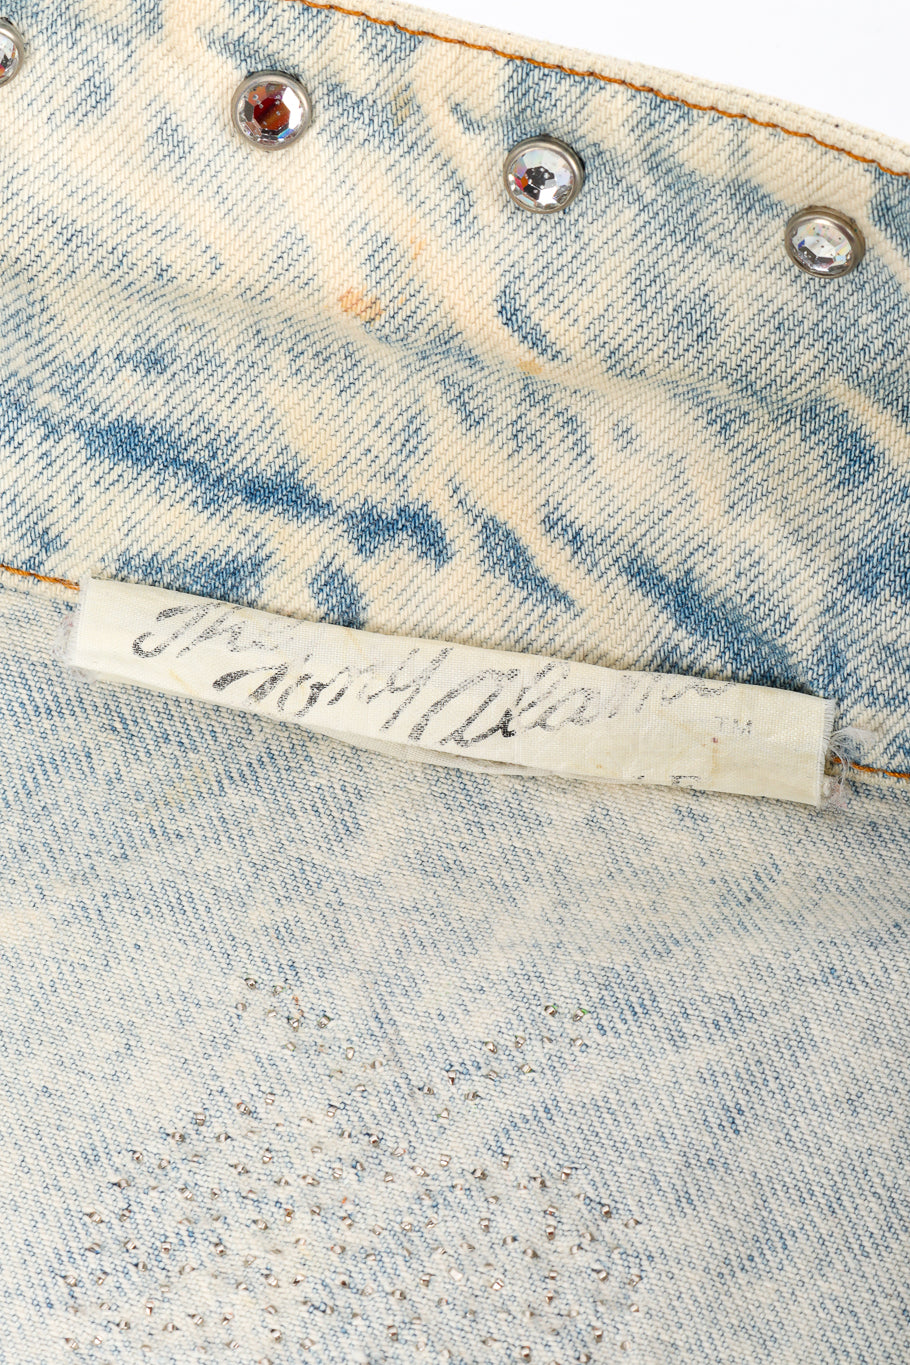 Vintage Tony Alomo New York Skyline Jacket signature label @recess la